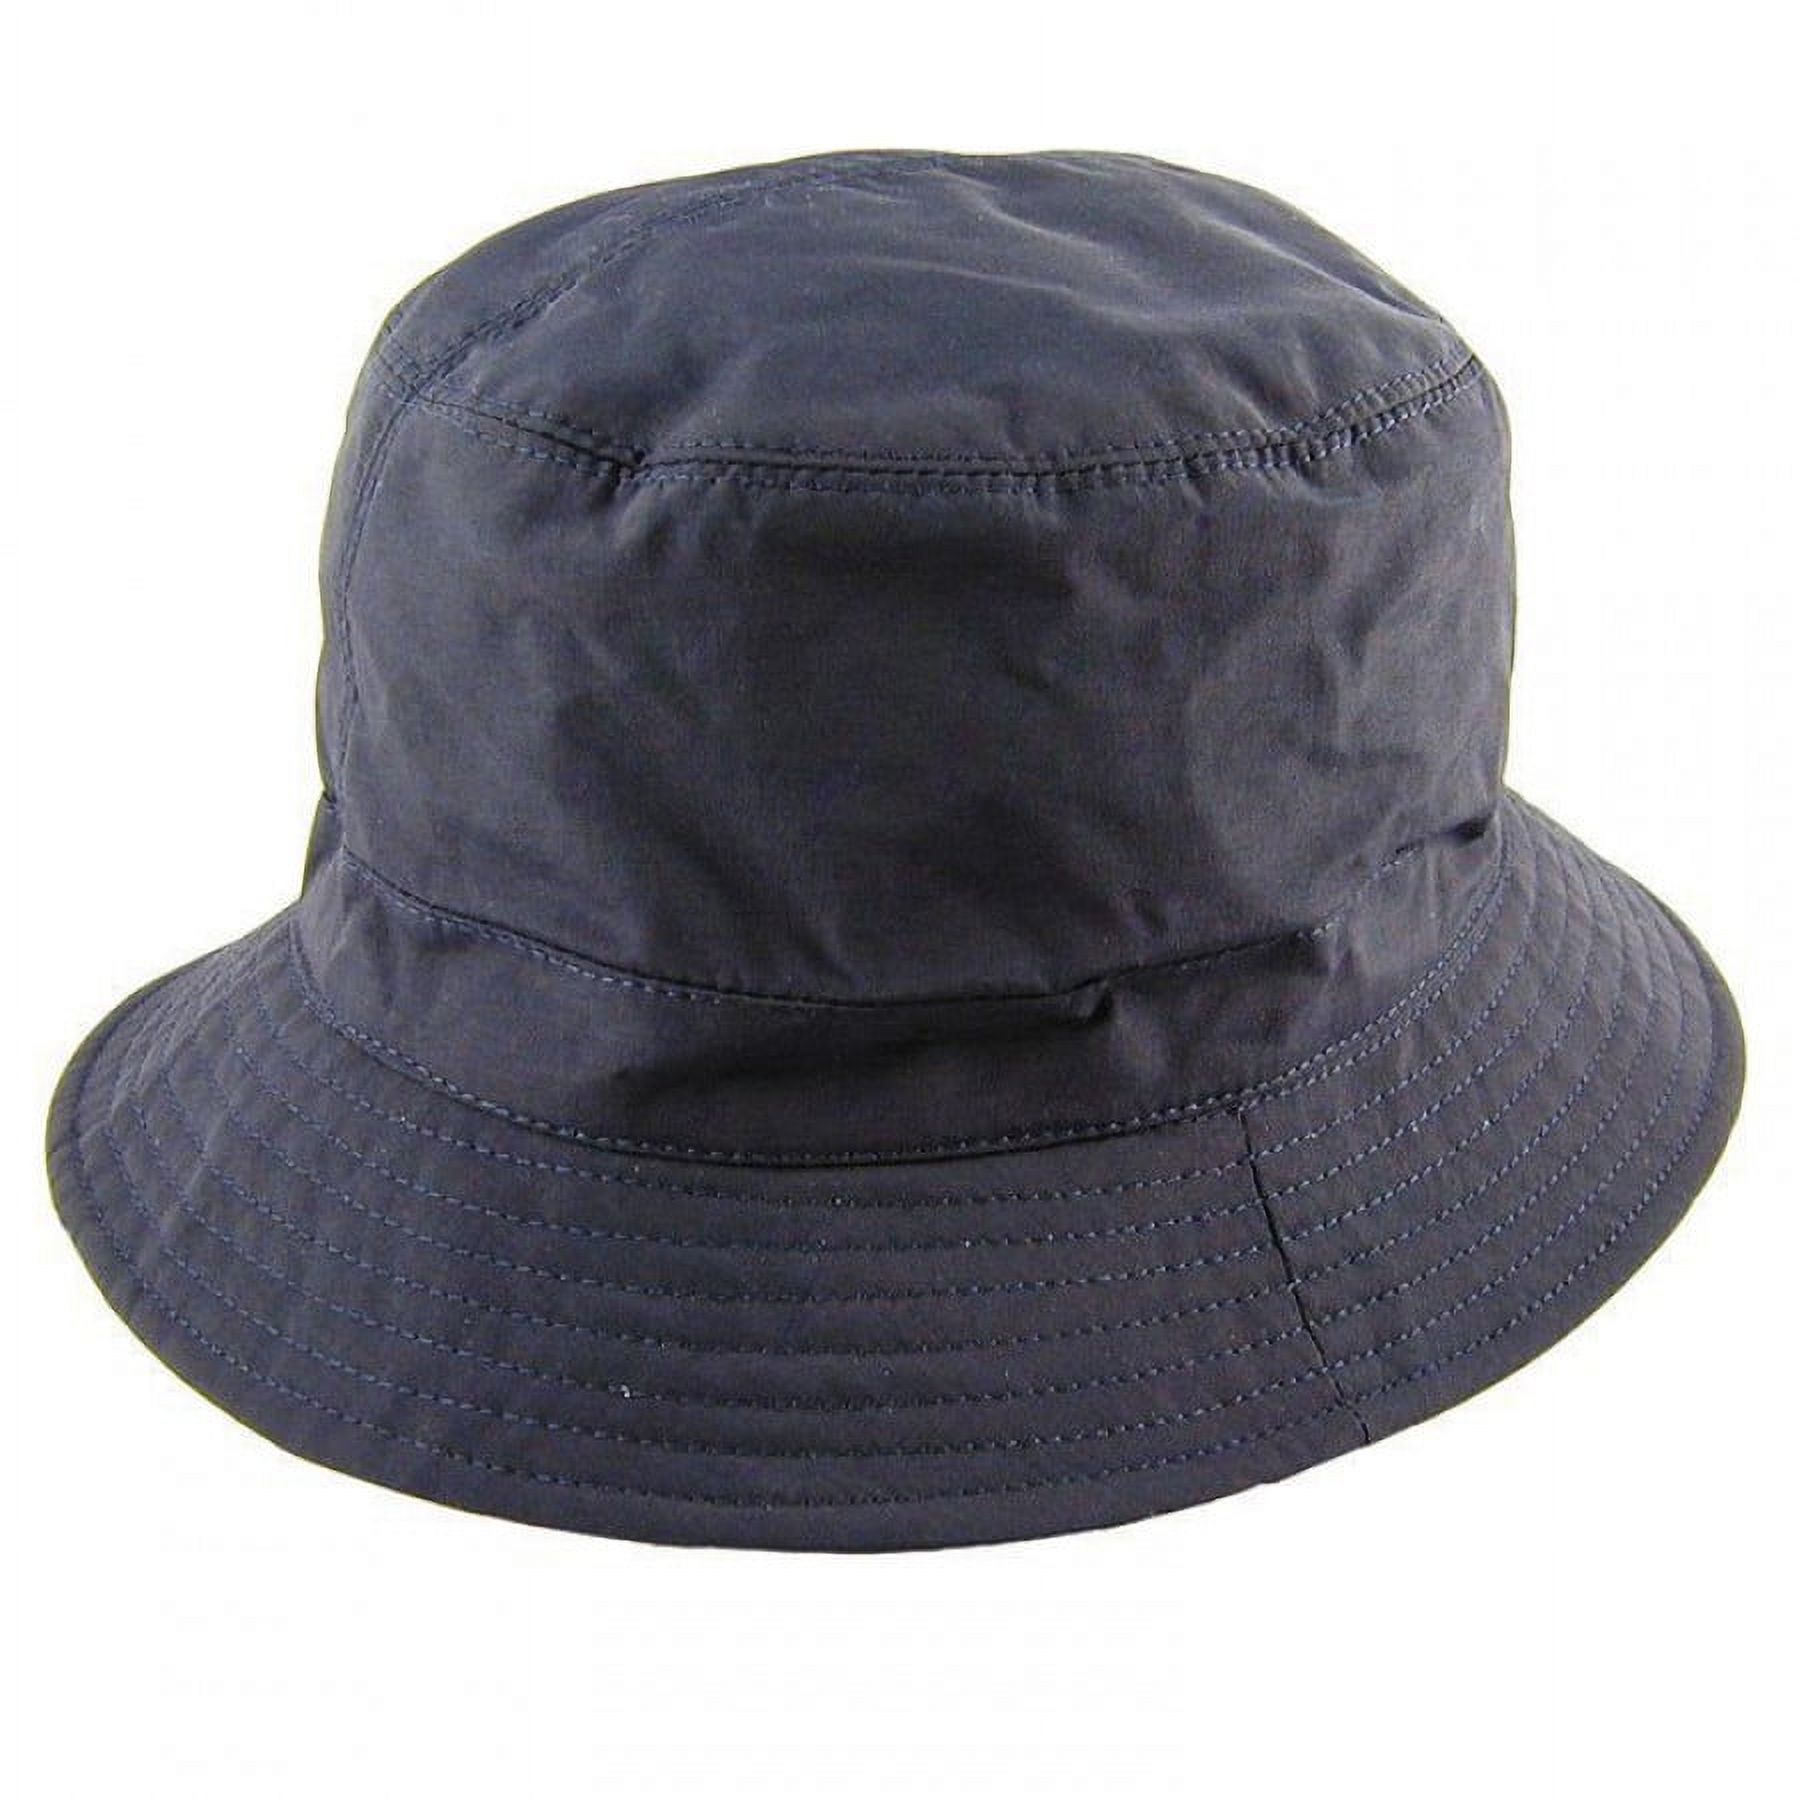 Nylon Rain Bucket Hat - ONE SIZE FITS MOST - Navy Blue - image 1 of 1